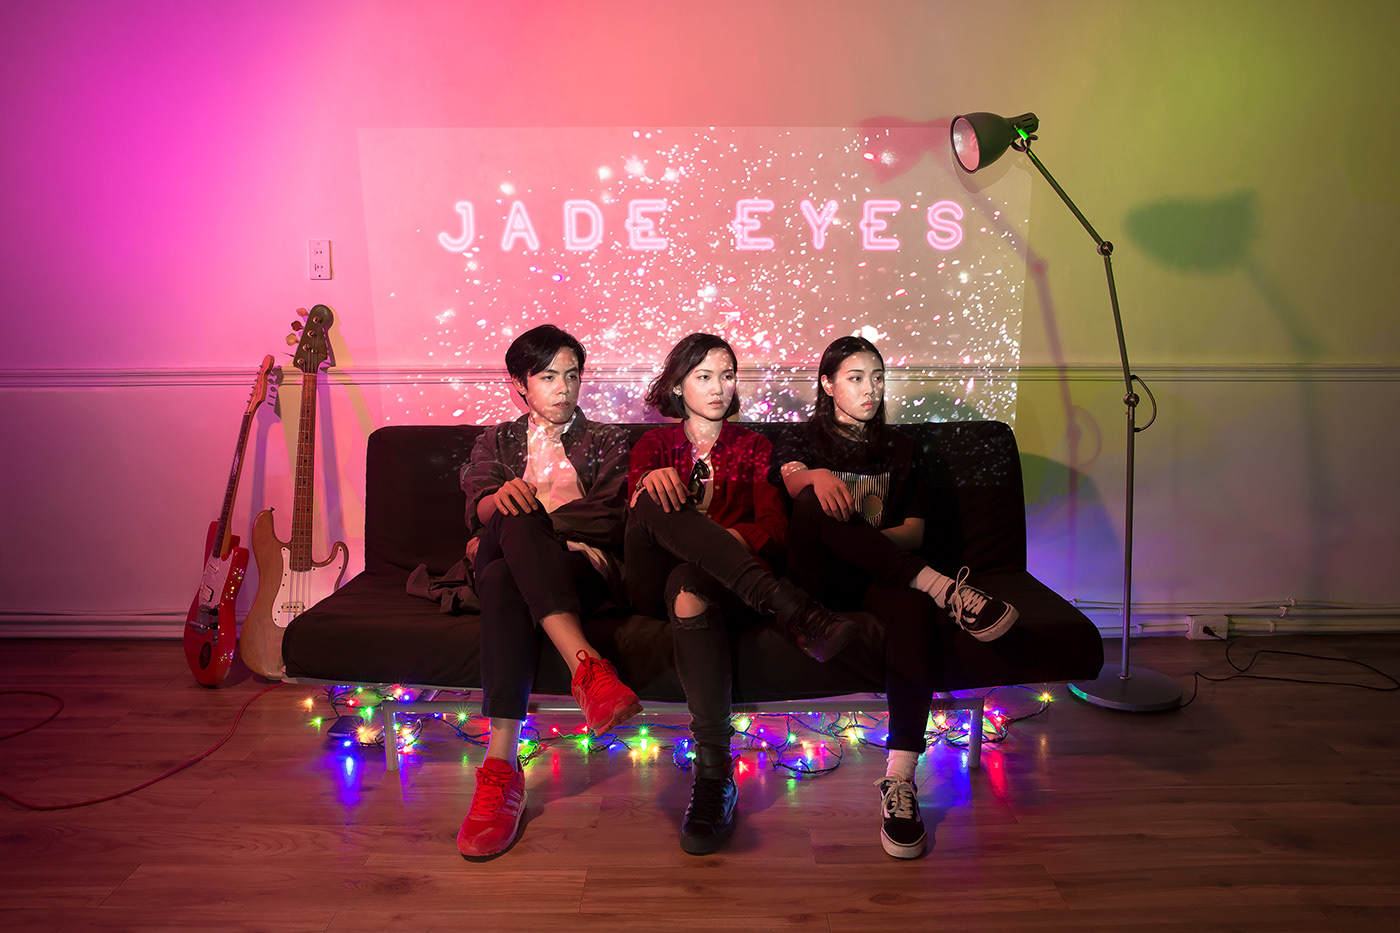 jade eyes band photograph vaporwave Street music night fluorescence gig